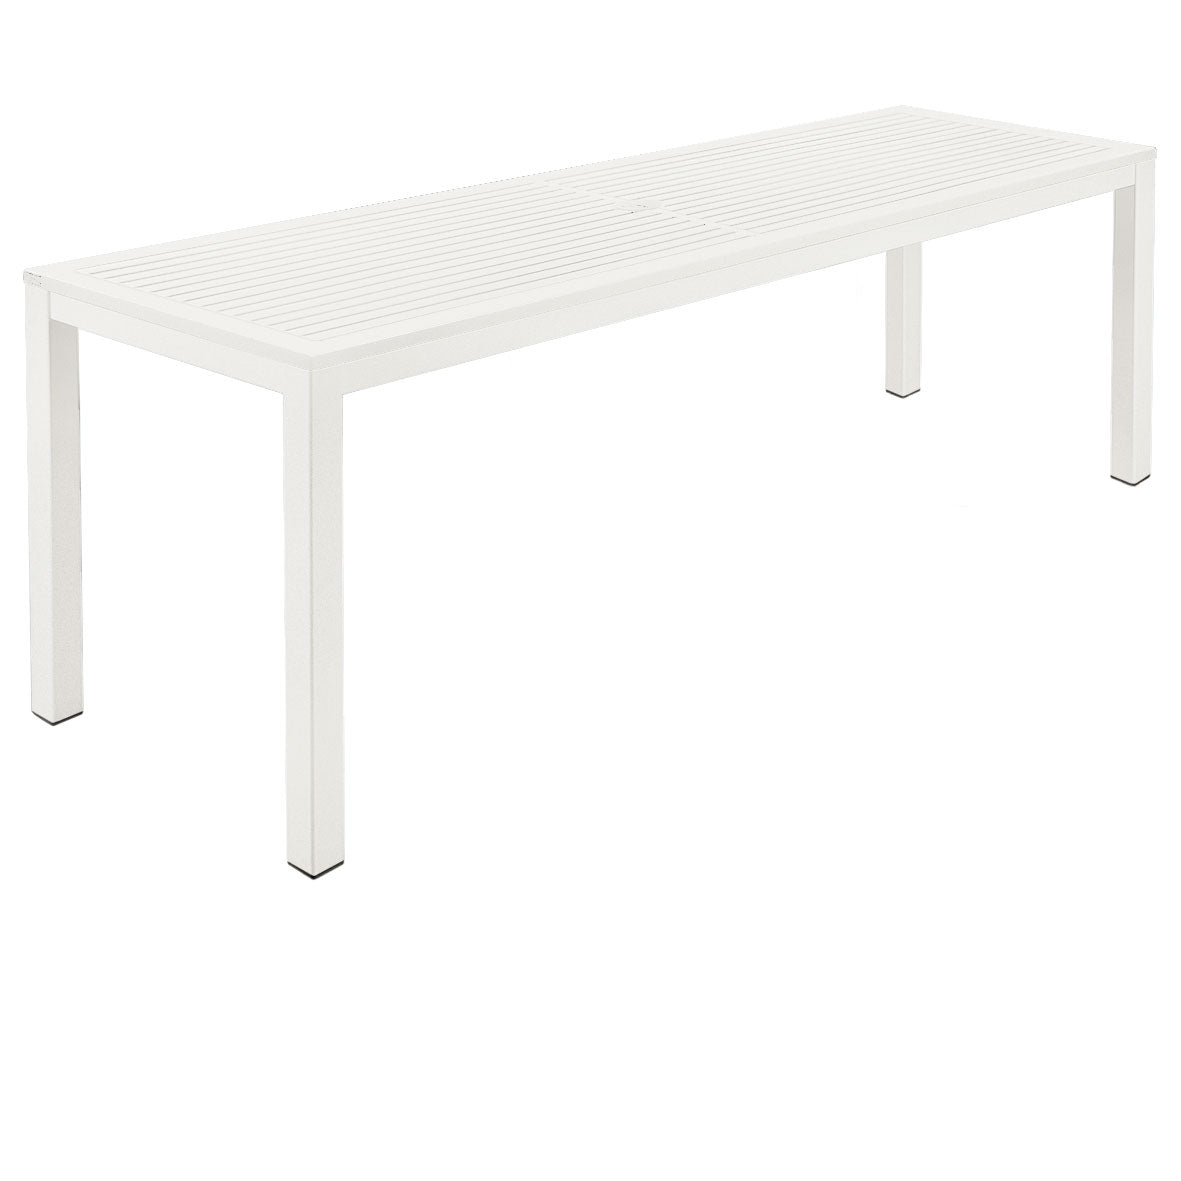 Aura aluminum narrow dining table 200 cm